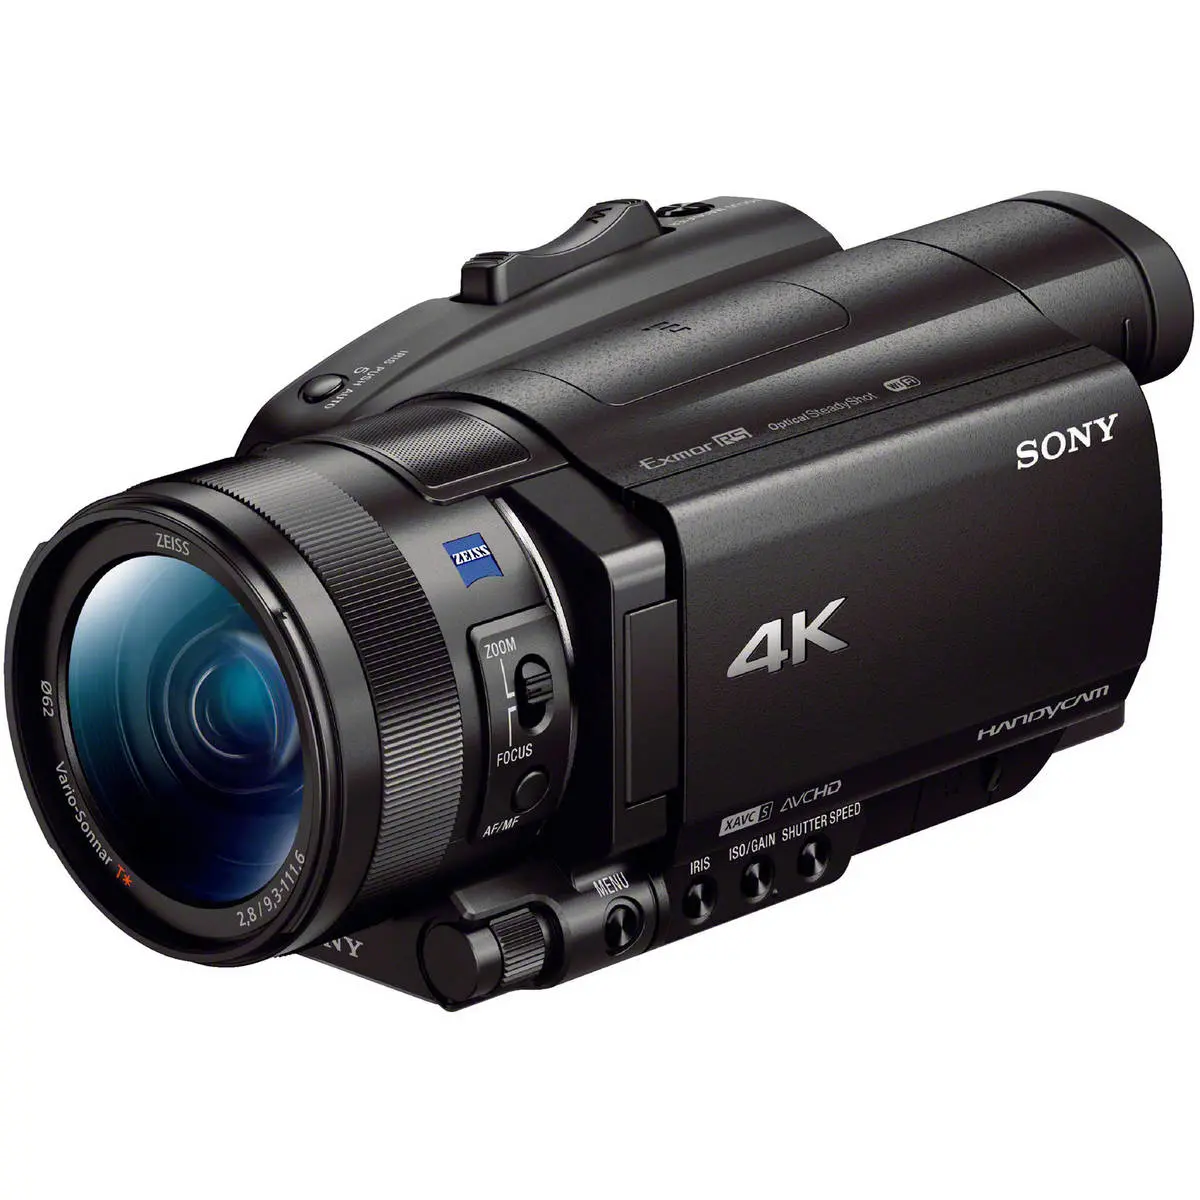 2. Sony FDR-AX700 4K Camcorder PAL